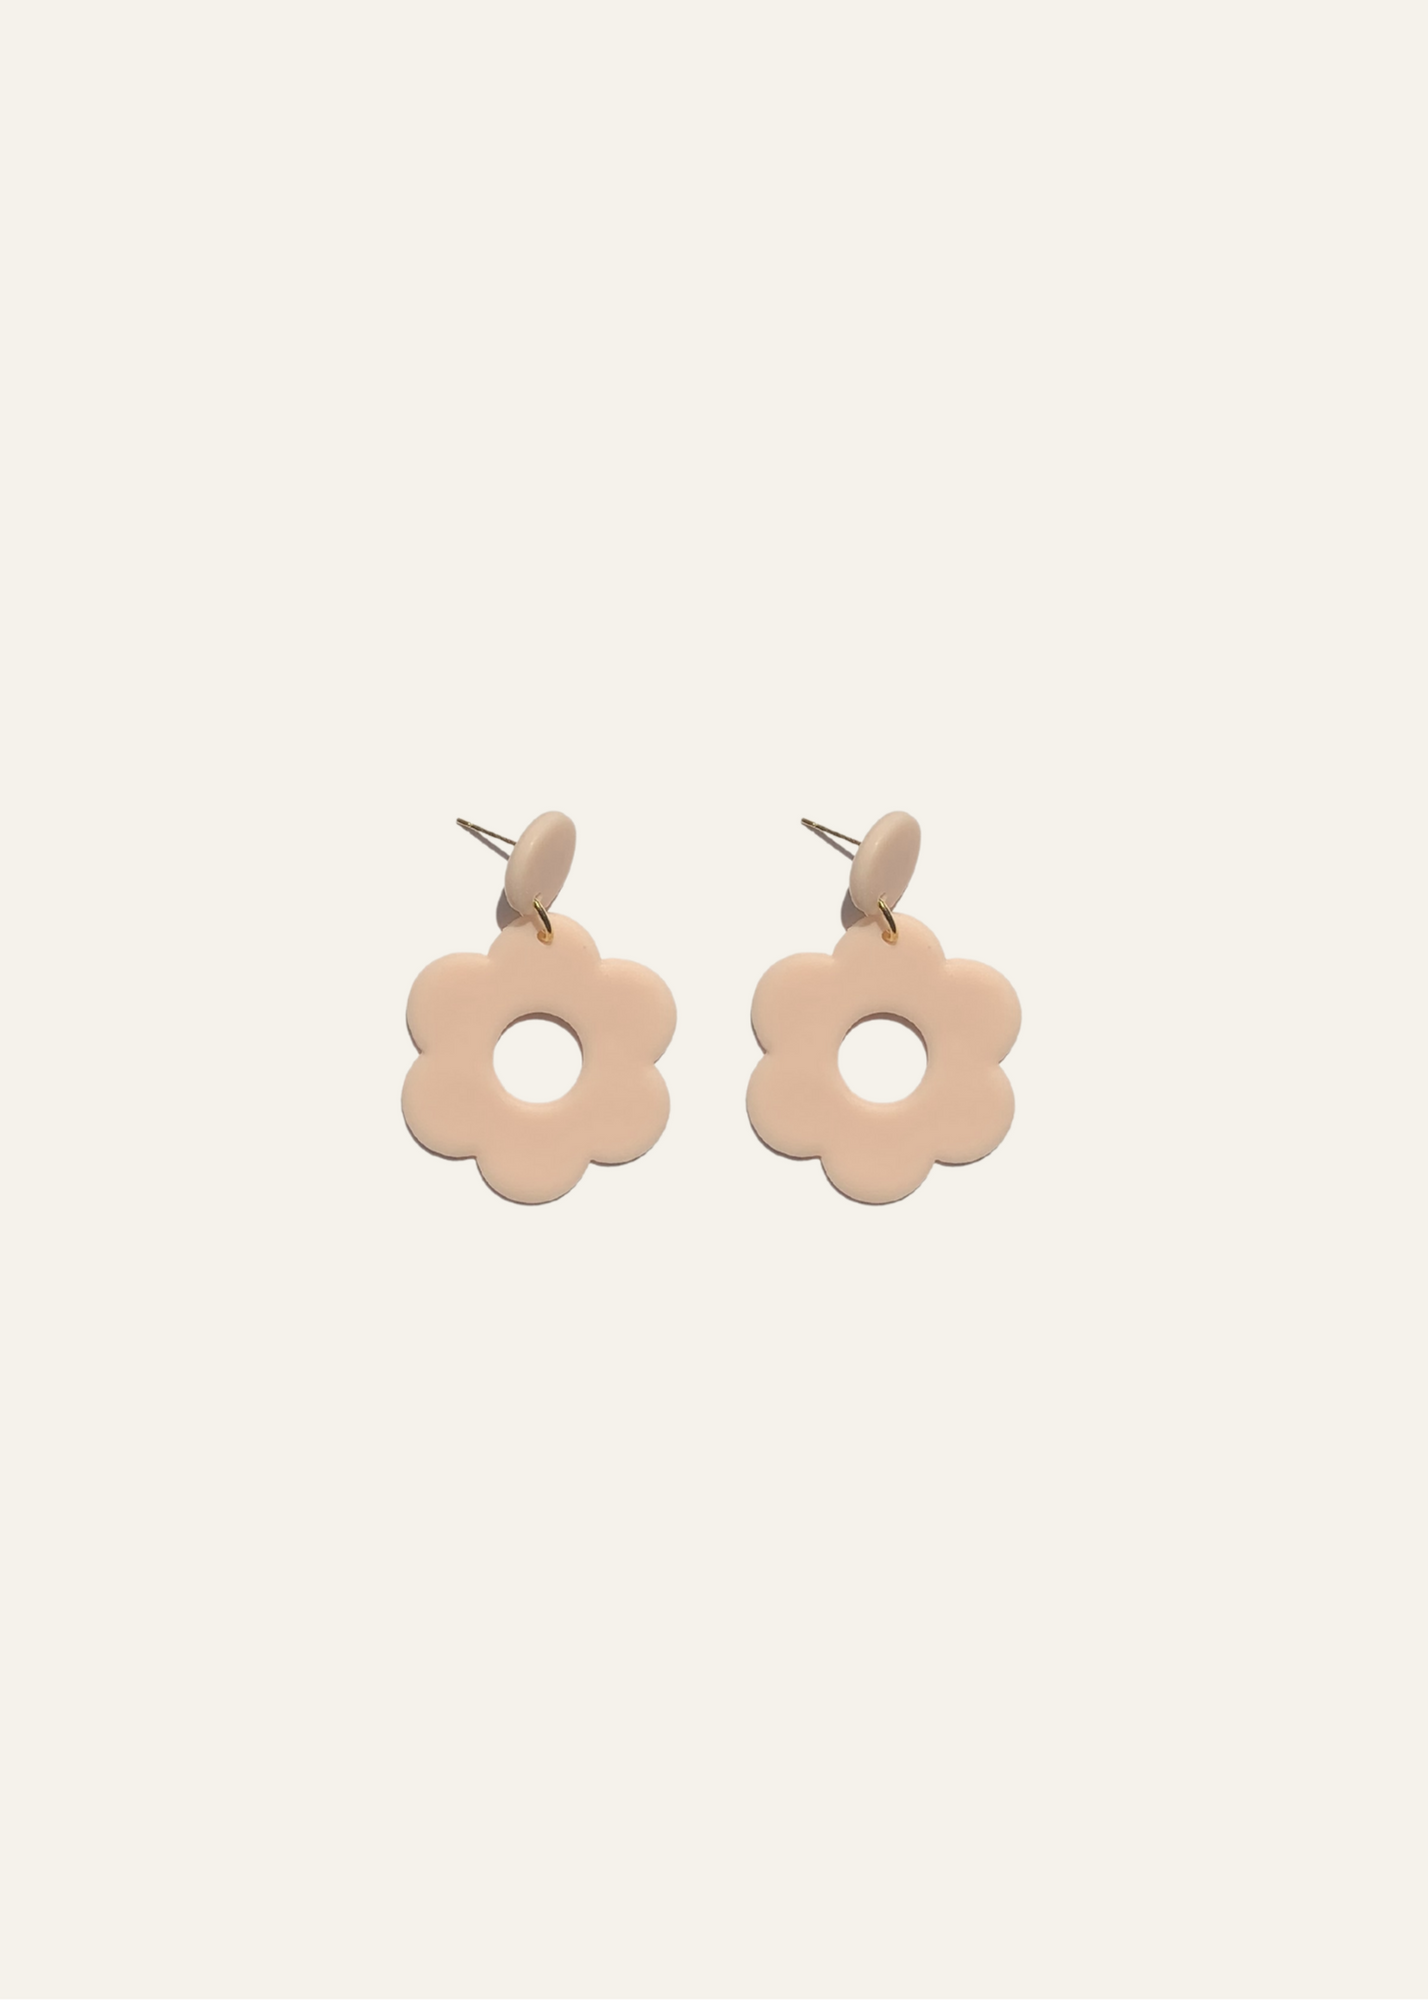 Mini Floral Earrings